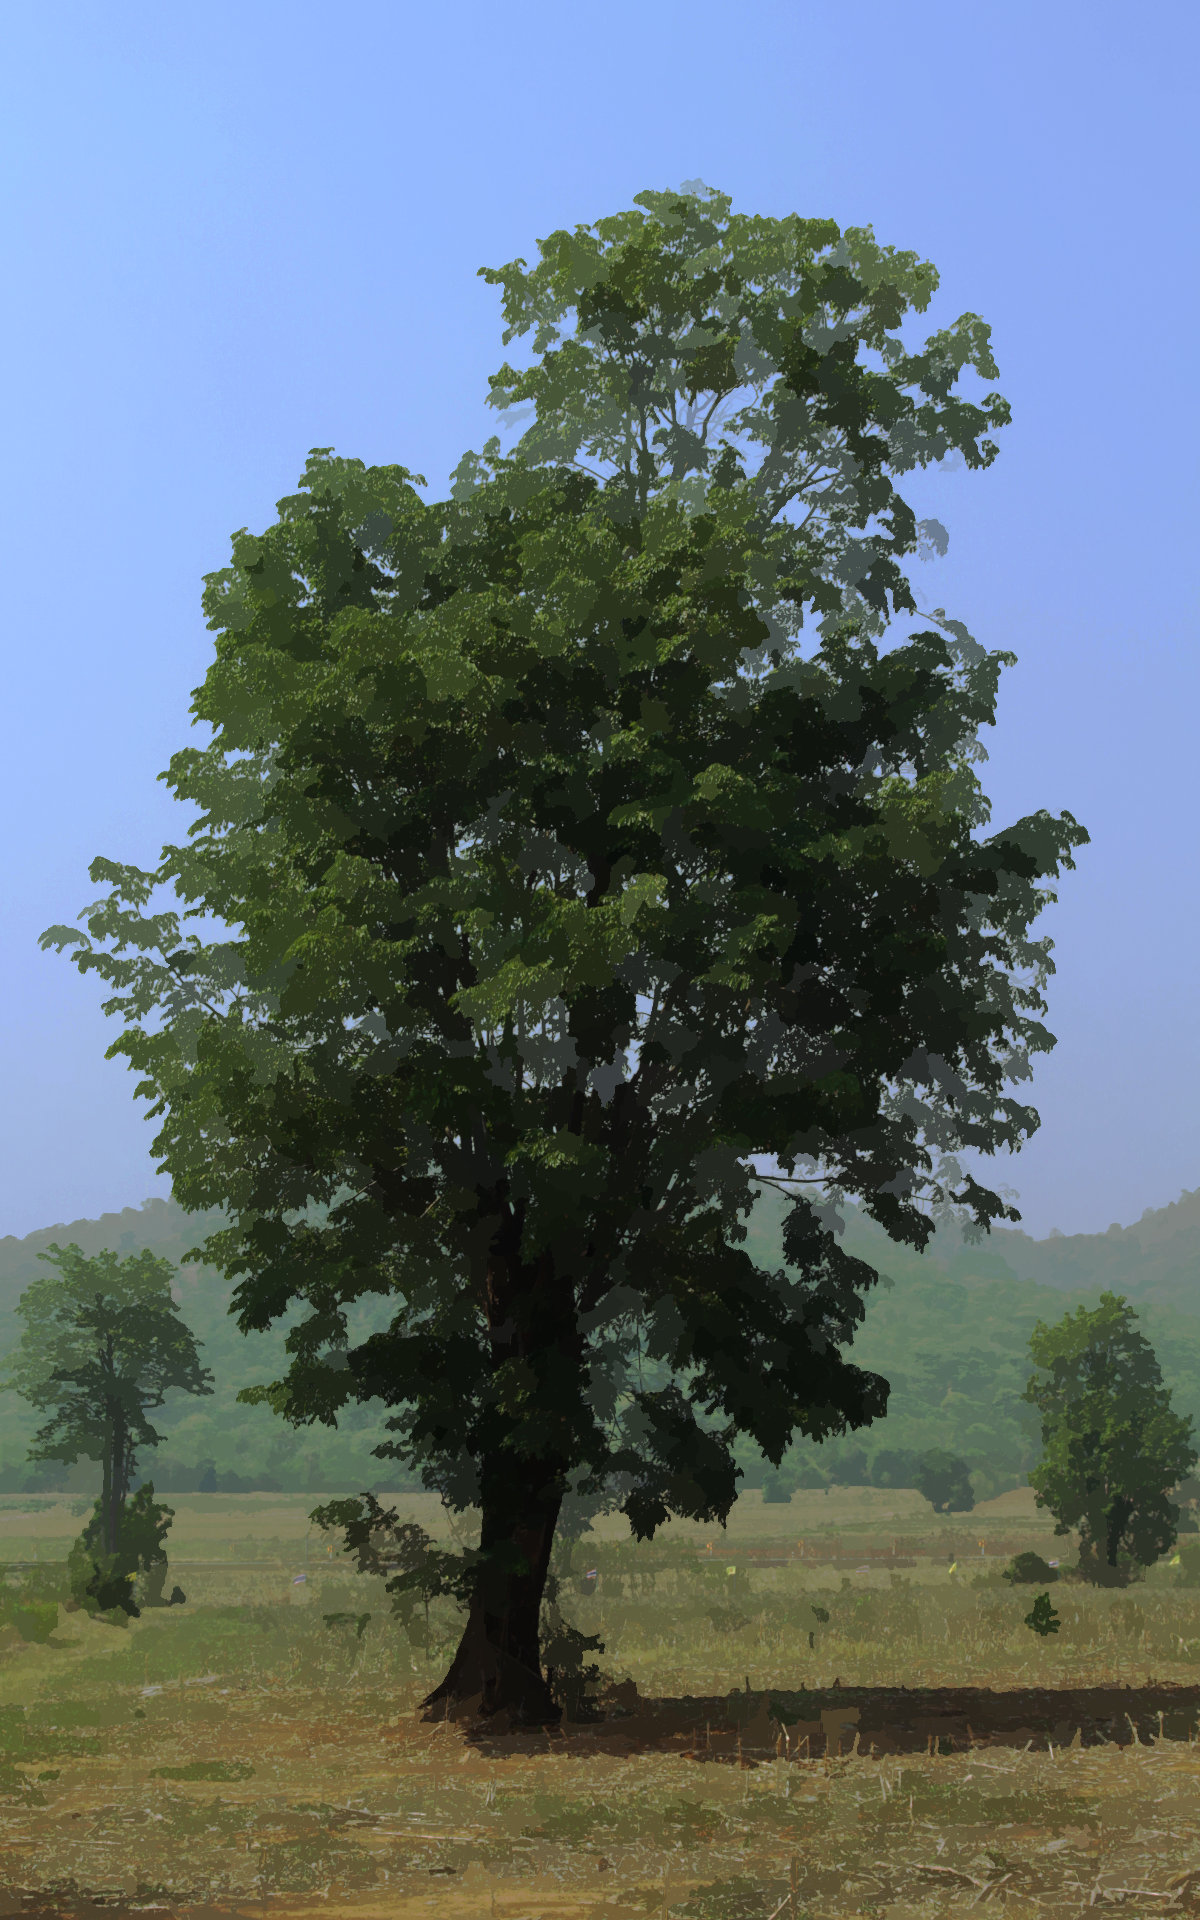 A tree in the field